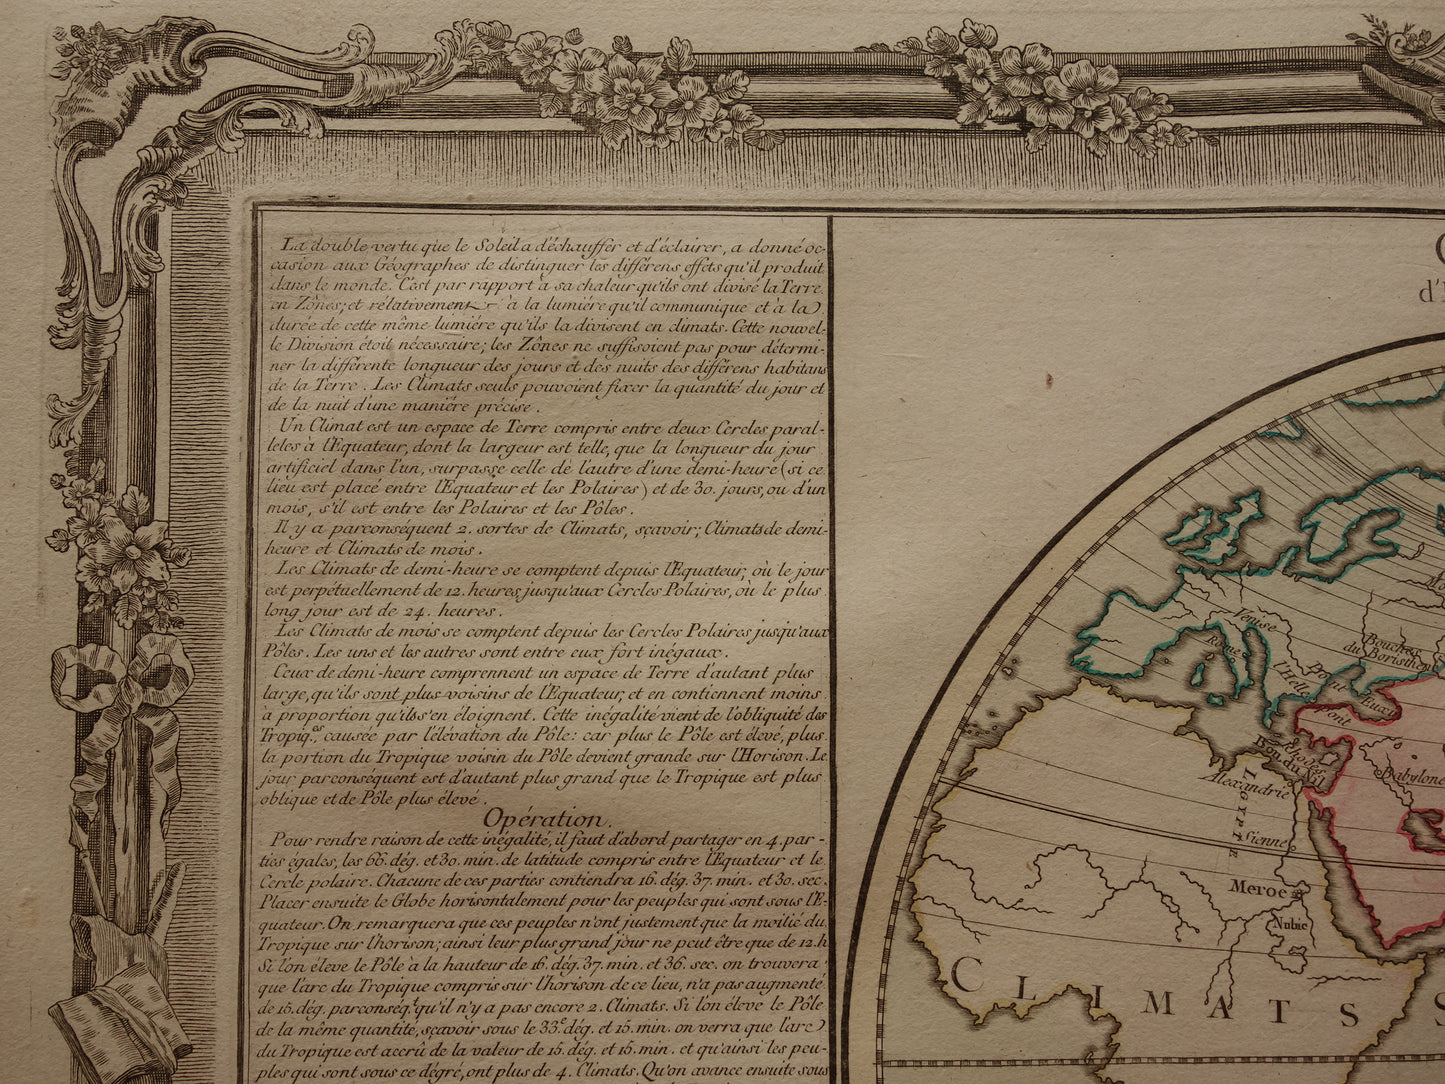 Oude Kaart Oostelijk Halfrond uit 1761 Originele Antieke Franse Landkaart Australië Incompleet Vintage Wereldkaart